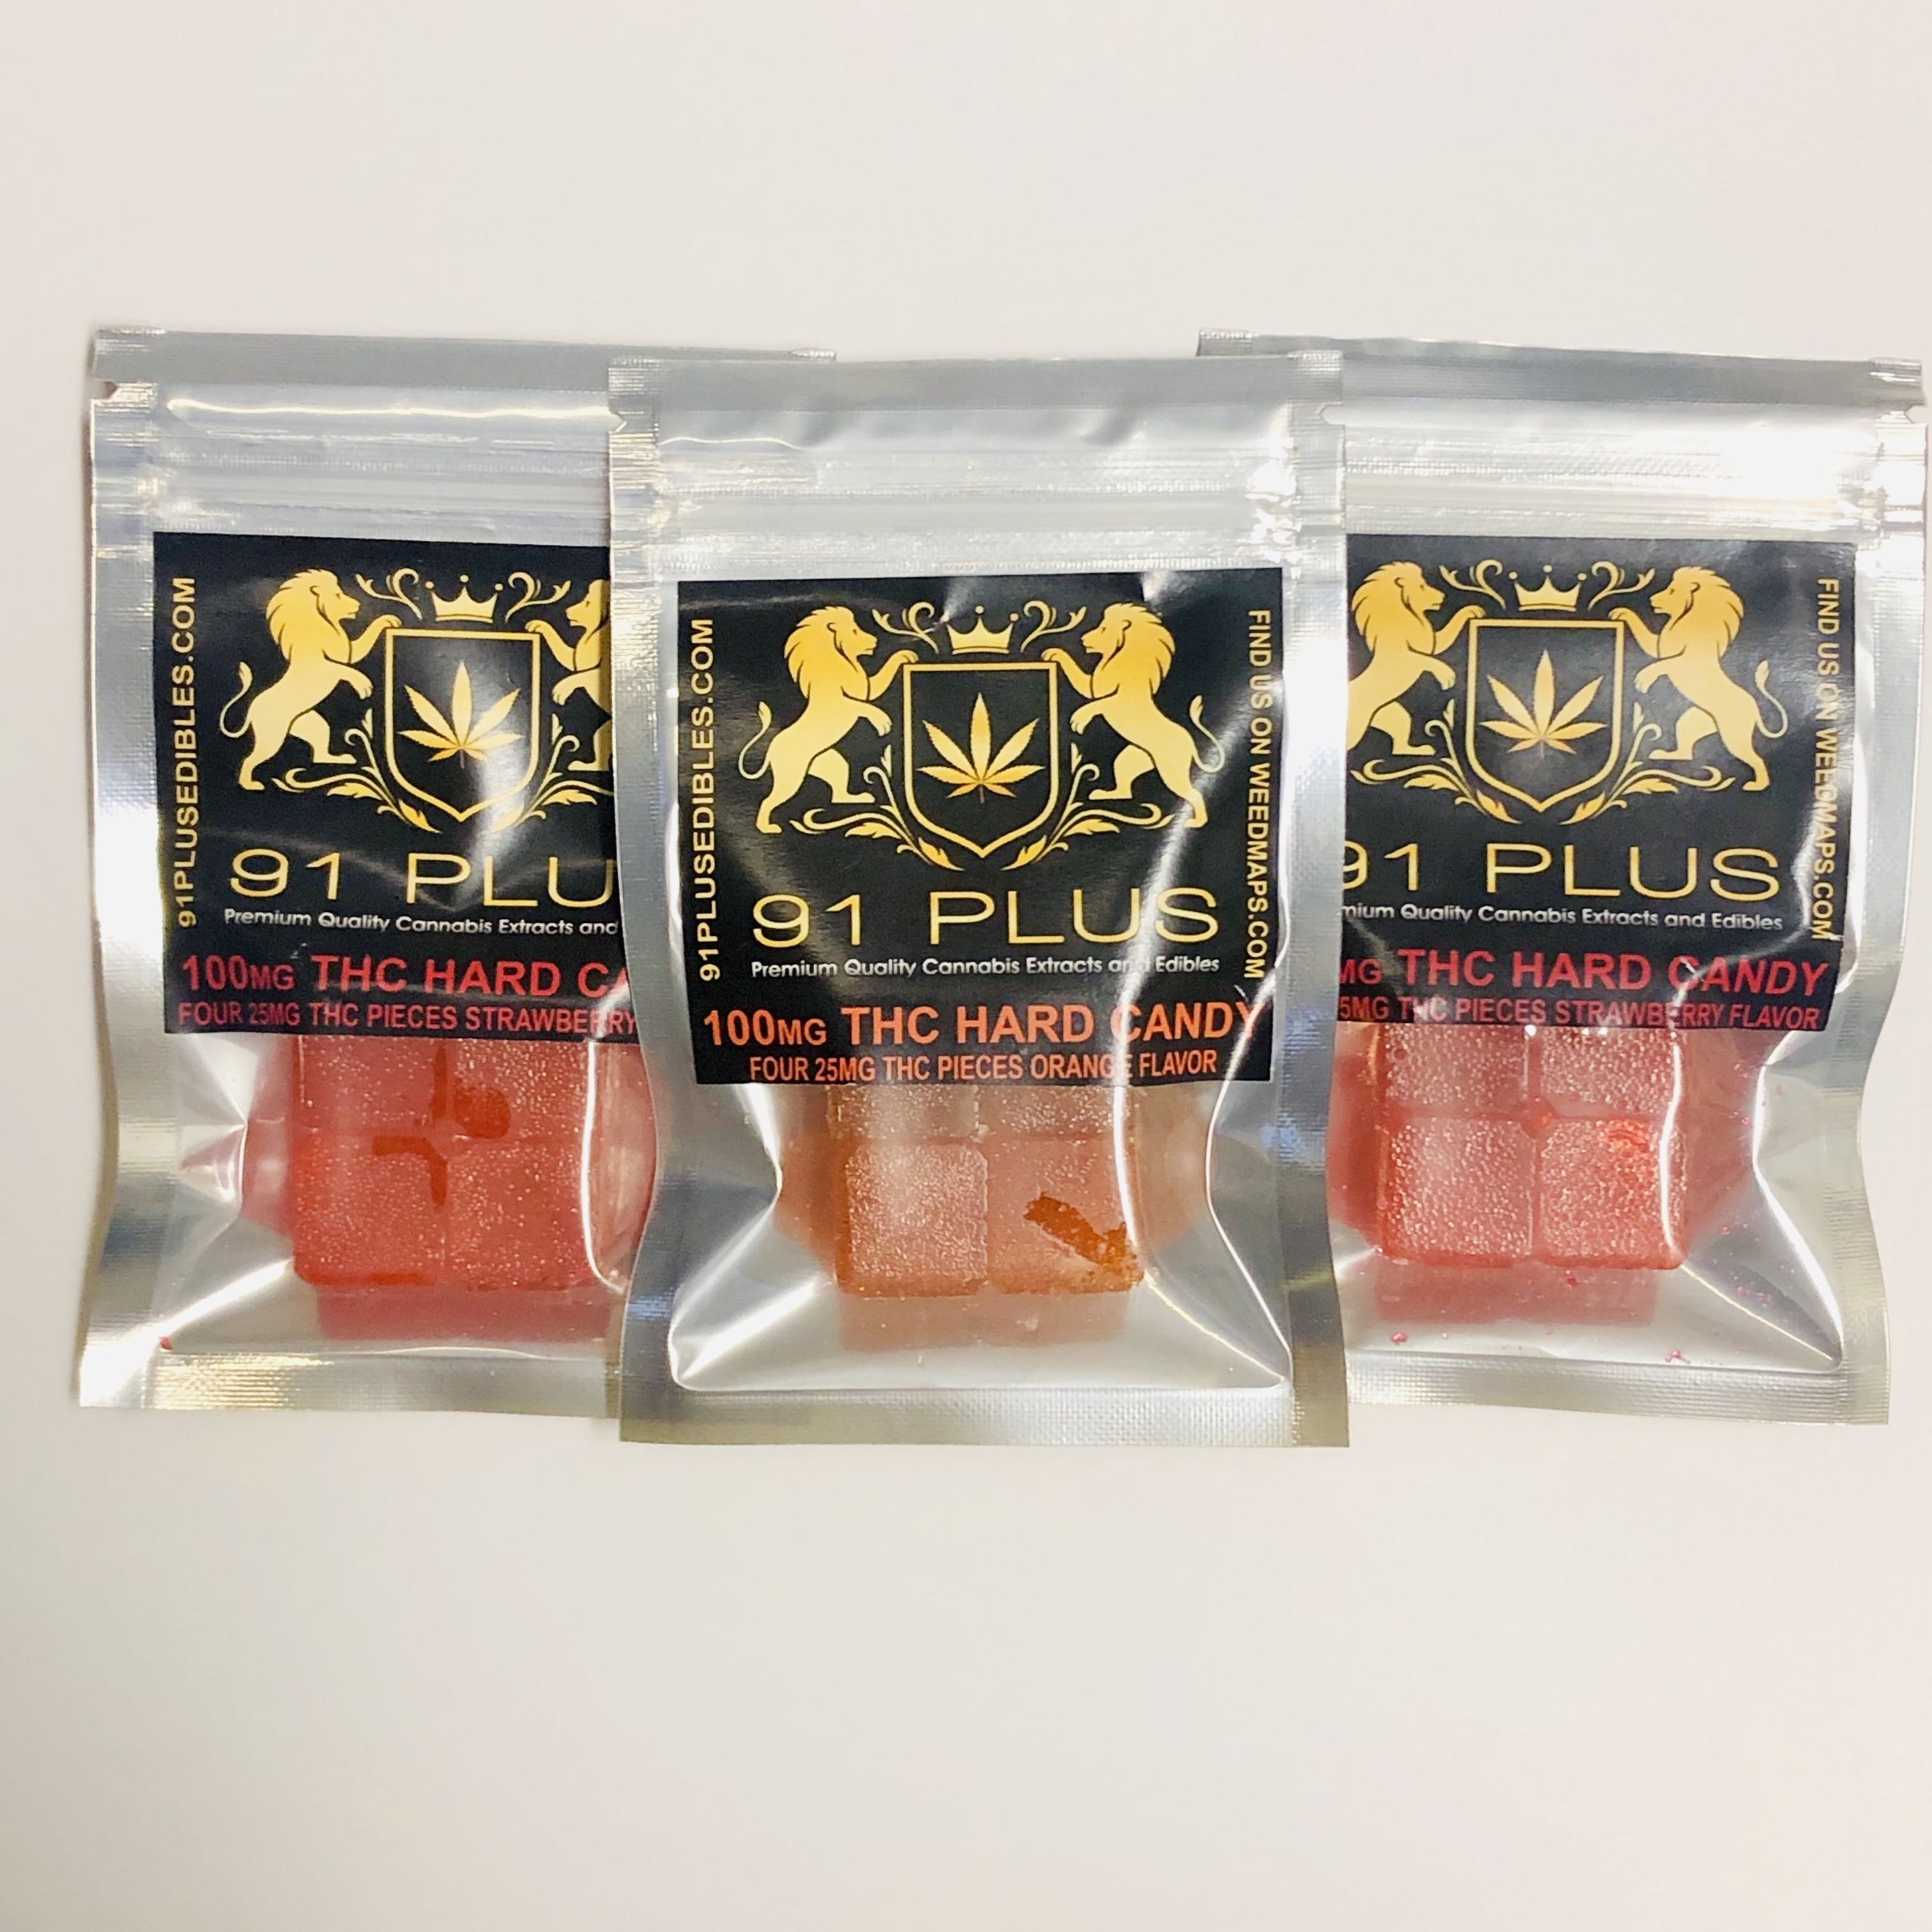 91 PLUS - Hard Candy 100mg (Orange, Apple, Strawberry)